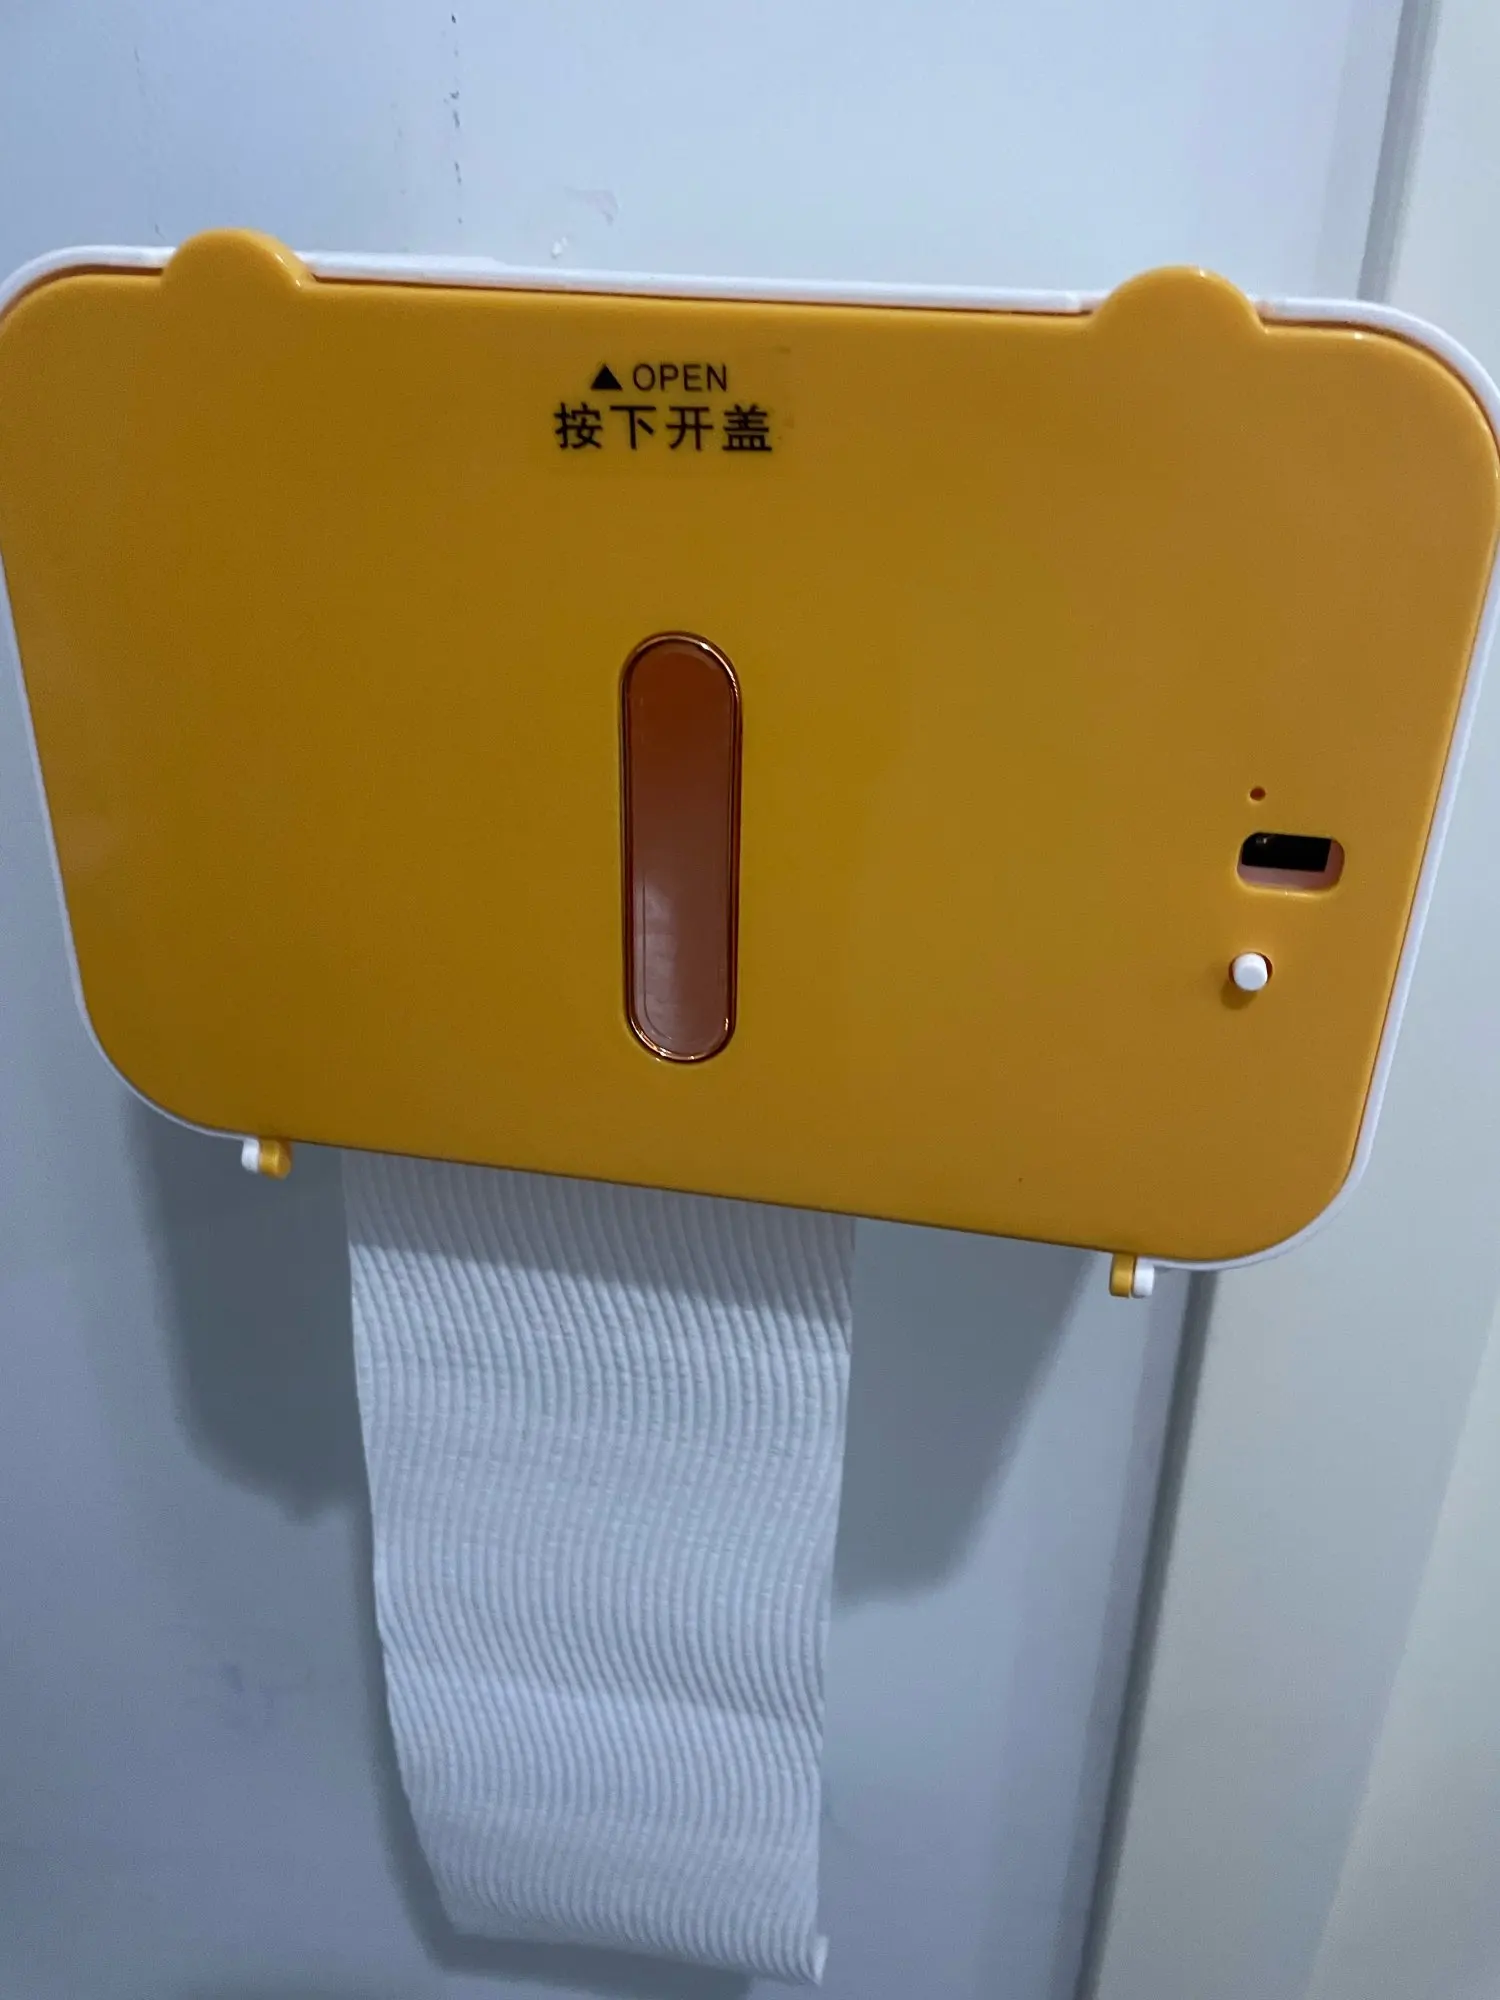 ðŸ’¥ Winter Clearance!!Free Transportation ðŸ’¥ ðŸ”¥Countertop Touchless Paper Towel Dispenser